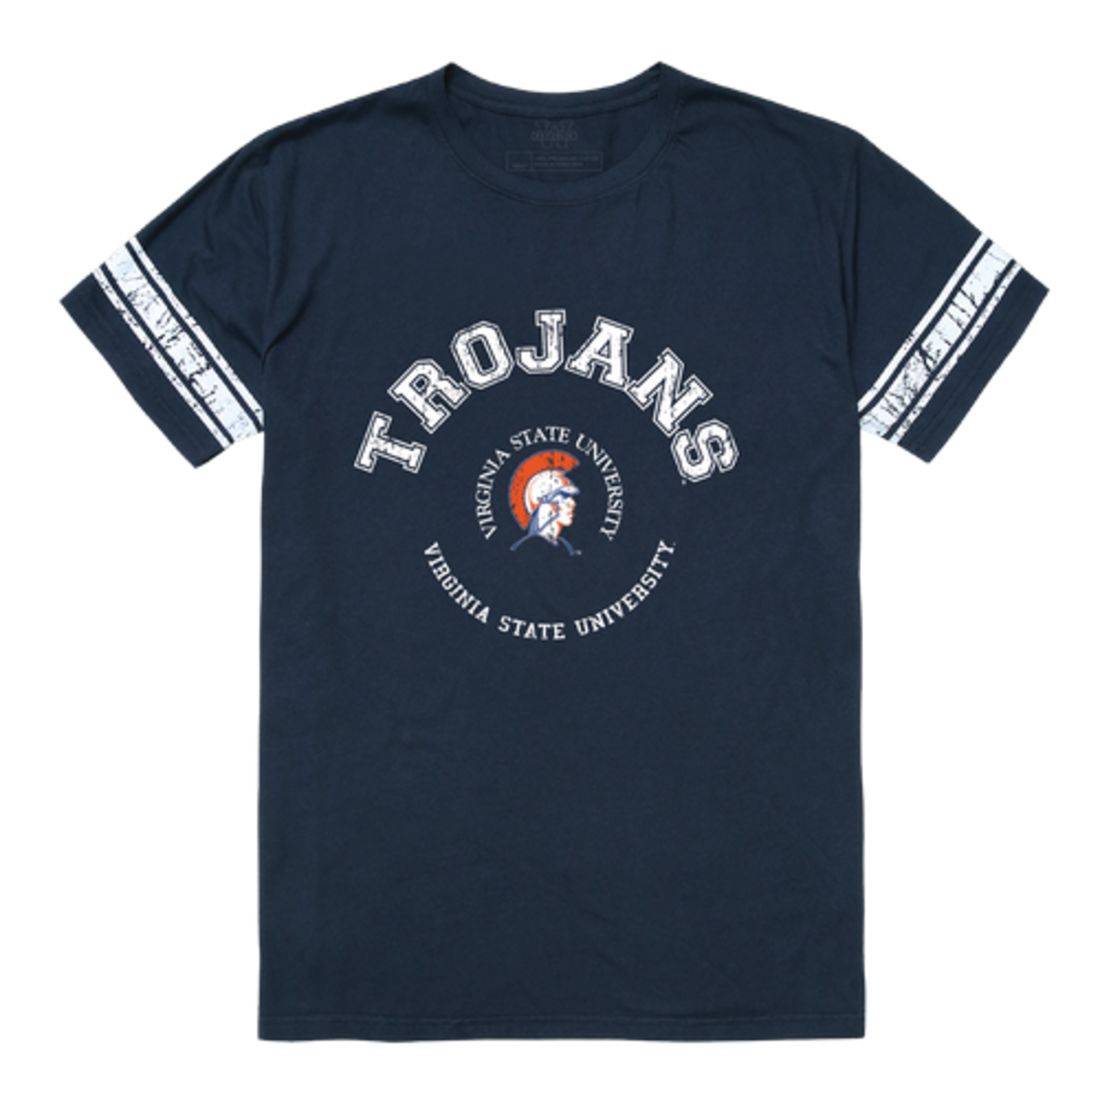 Virginia State University Trojans Football T-Shirt Tee